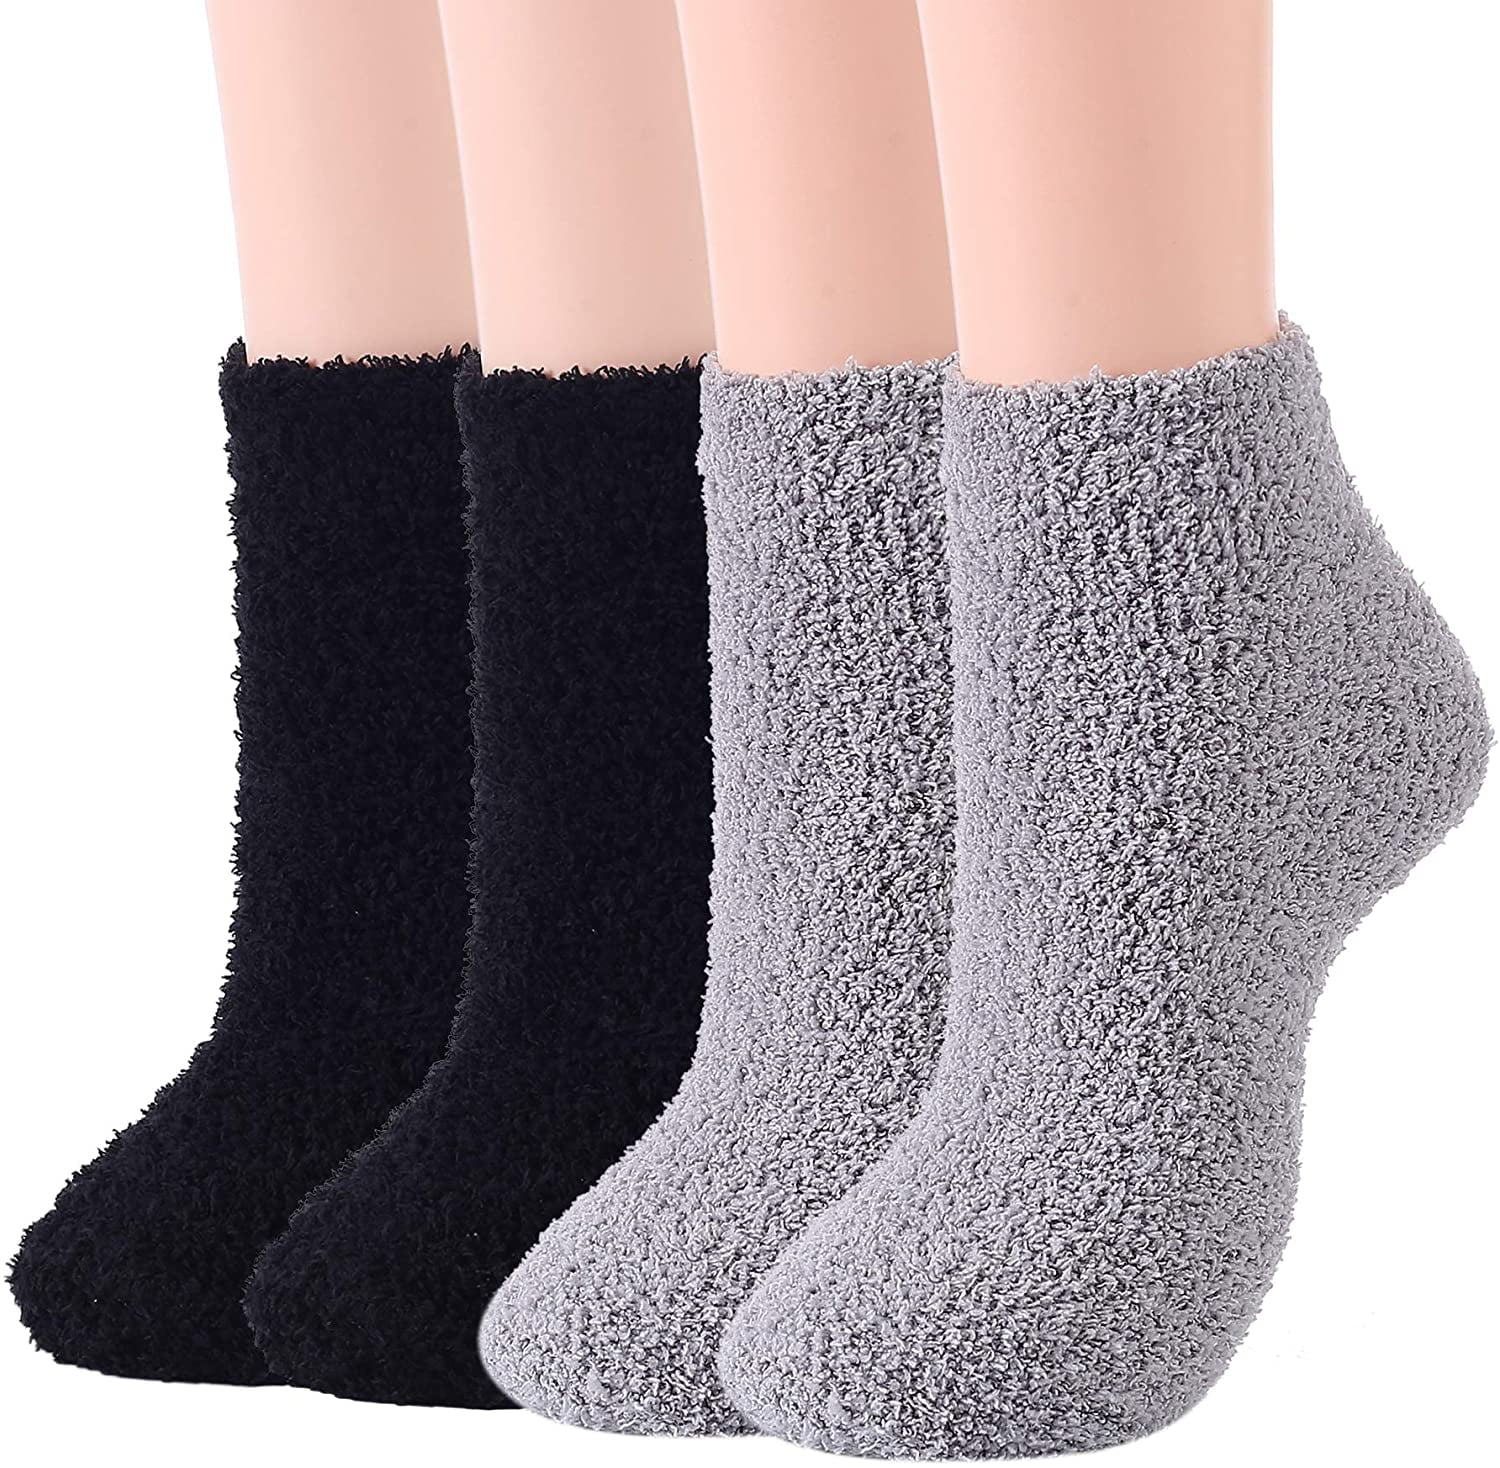 Sock Soft Lady Women Floor Bed Socks Warm Fuzzy Fluffy Cozy Thick Winter Plush